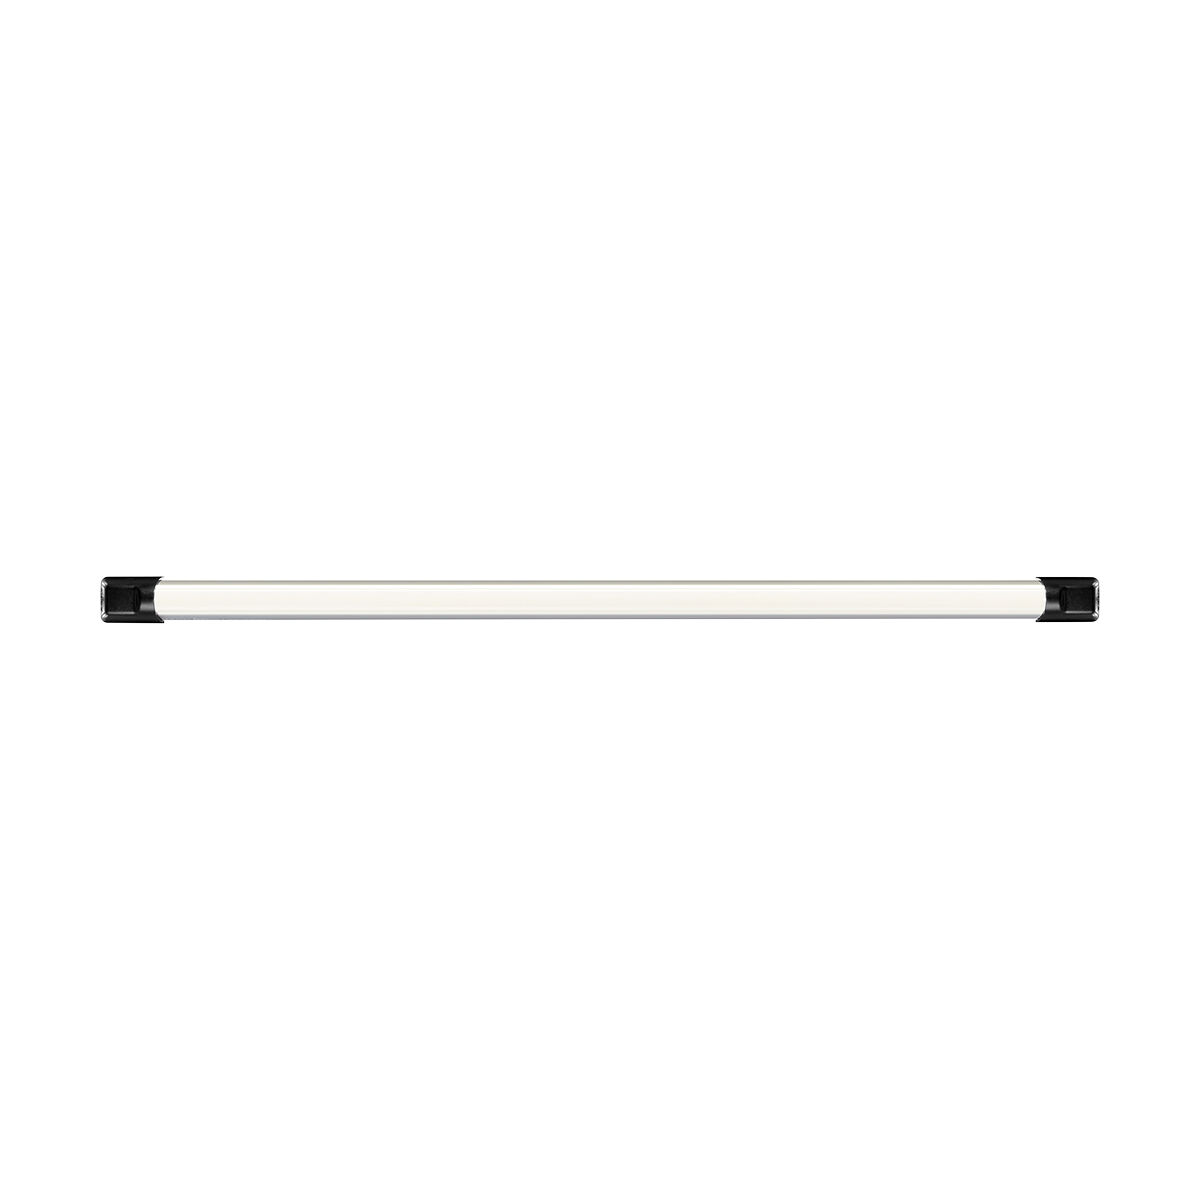 Hardkorr LED Light Bar with Diffuser - Orange / White 48cm, , scaau_hi-res